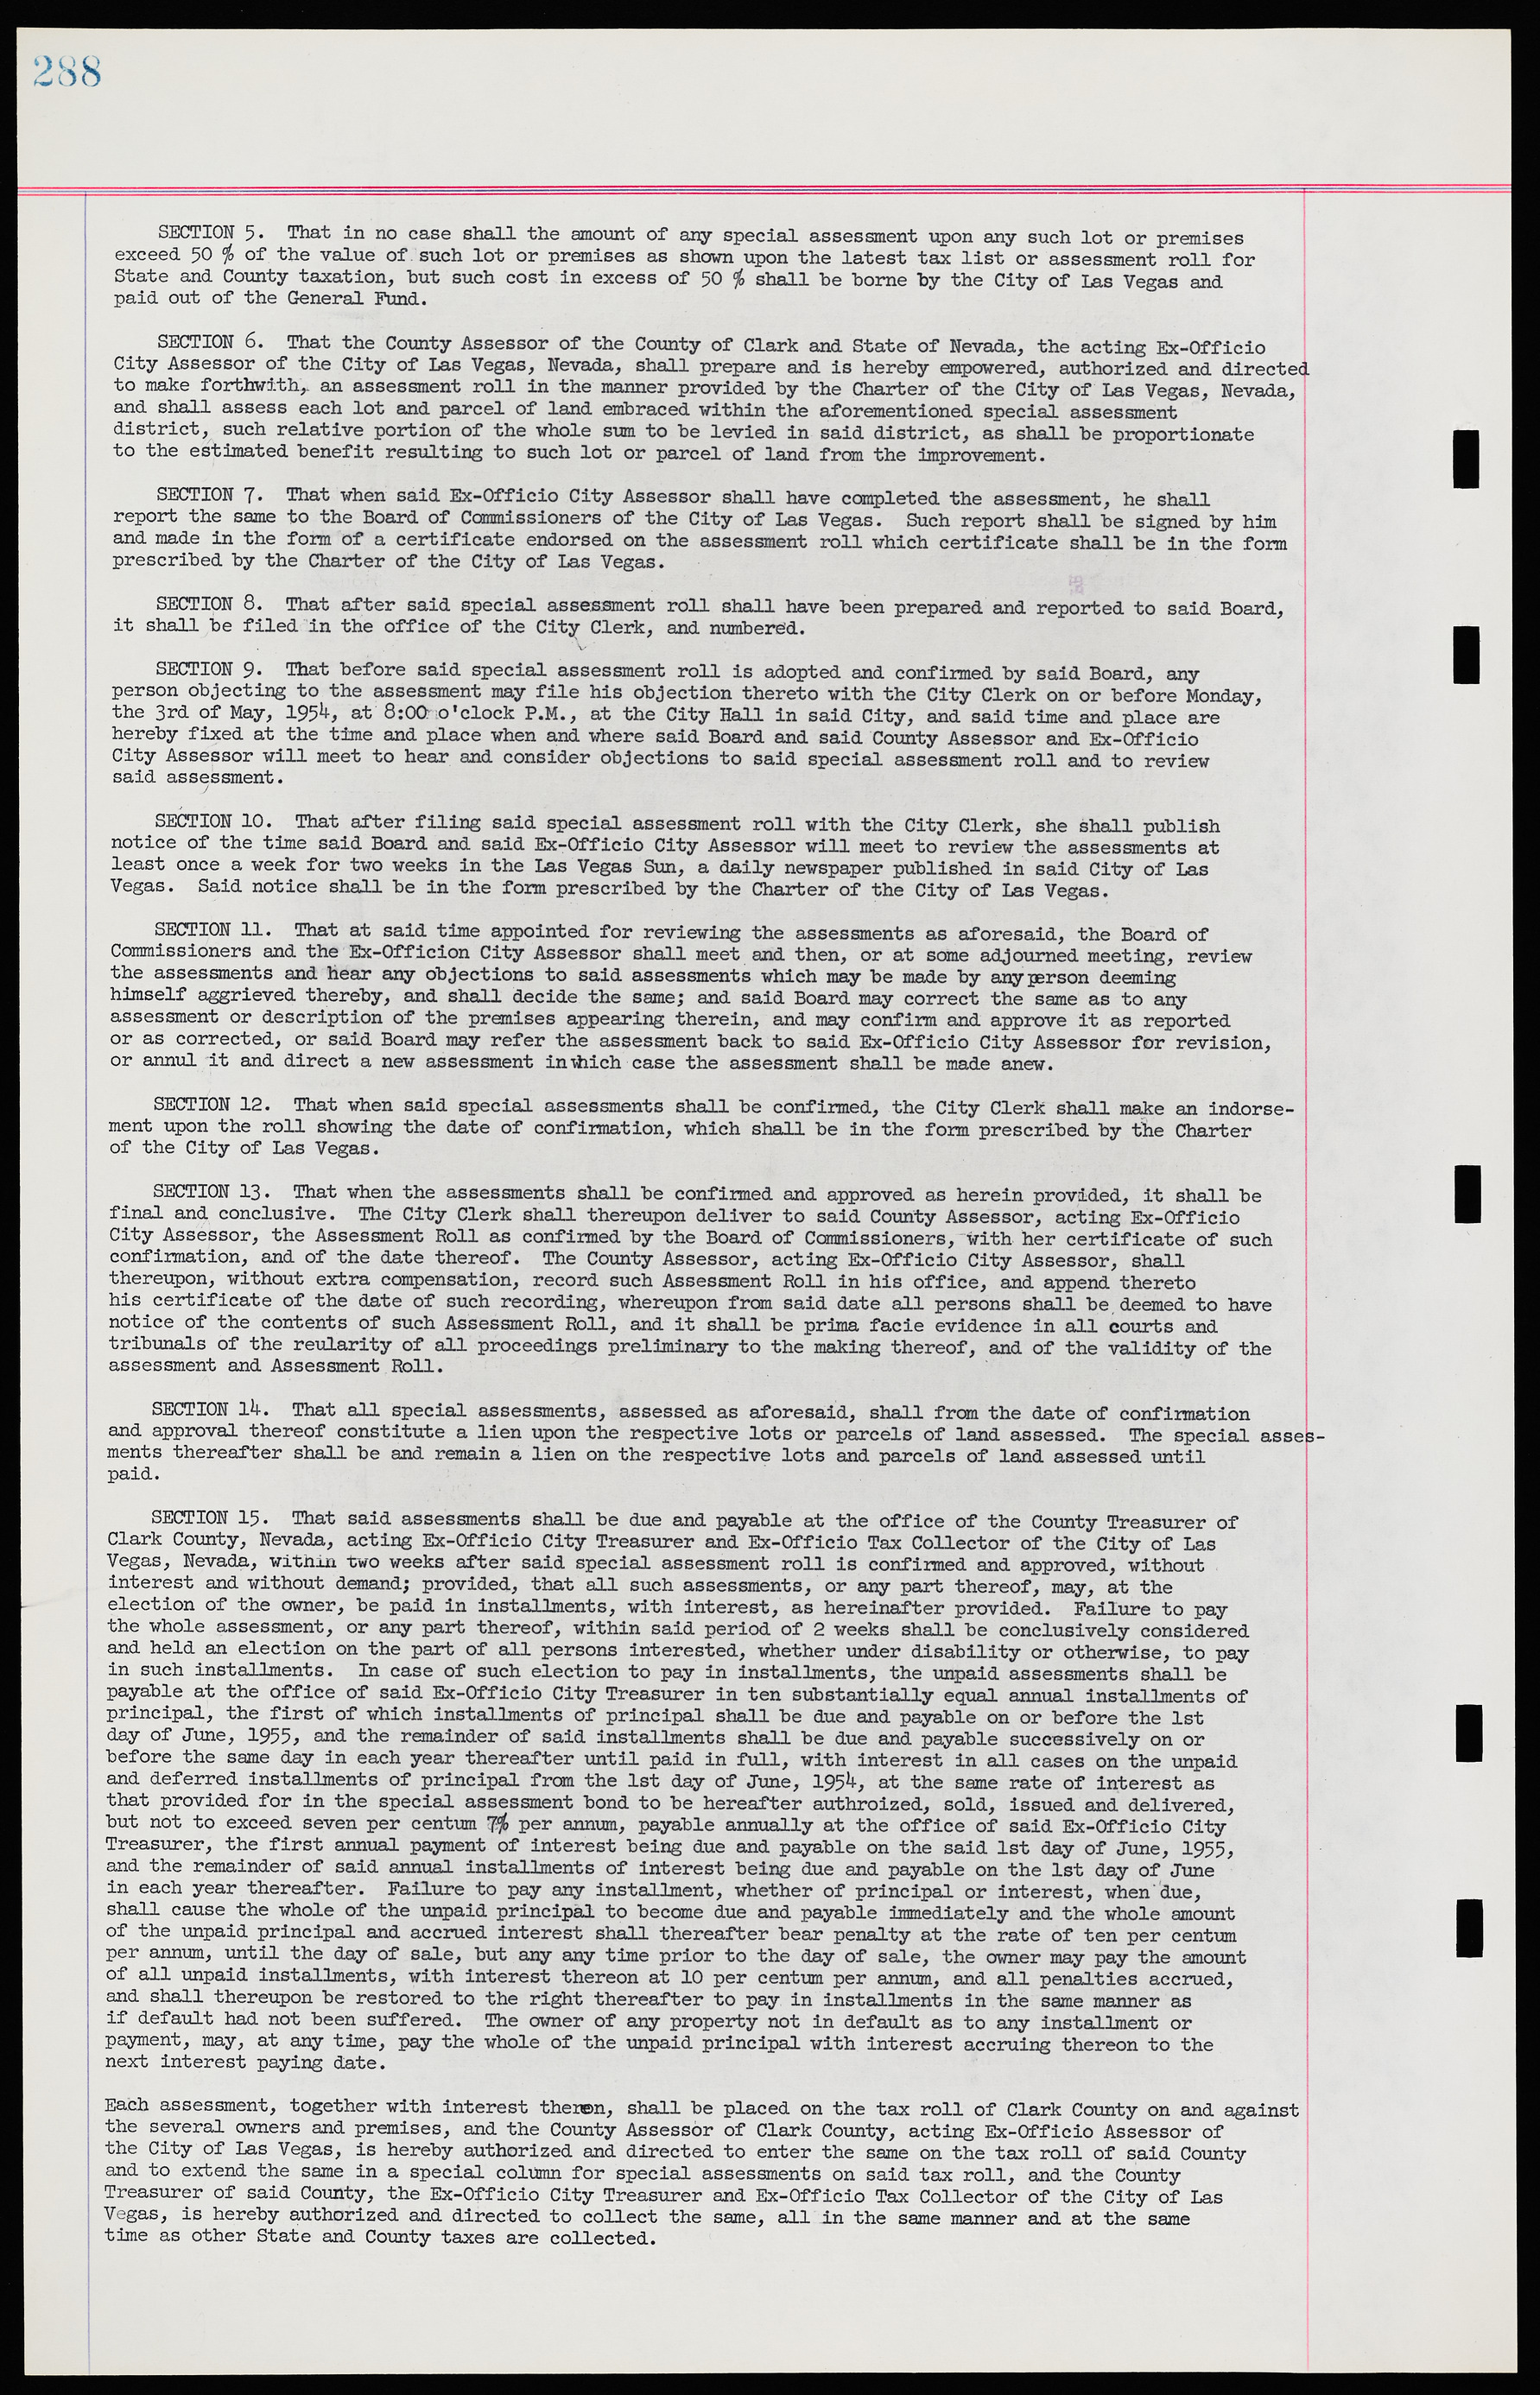 Las Vegas City Ordinances, November 13, 1950 to August 6, 1958, lvc000015-296